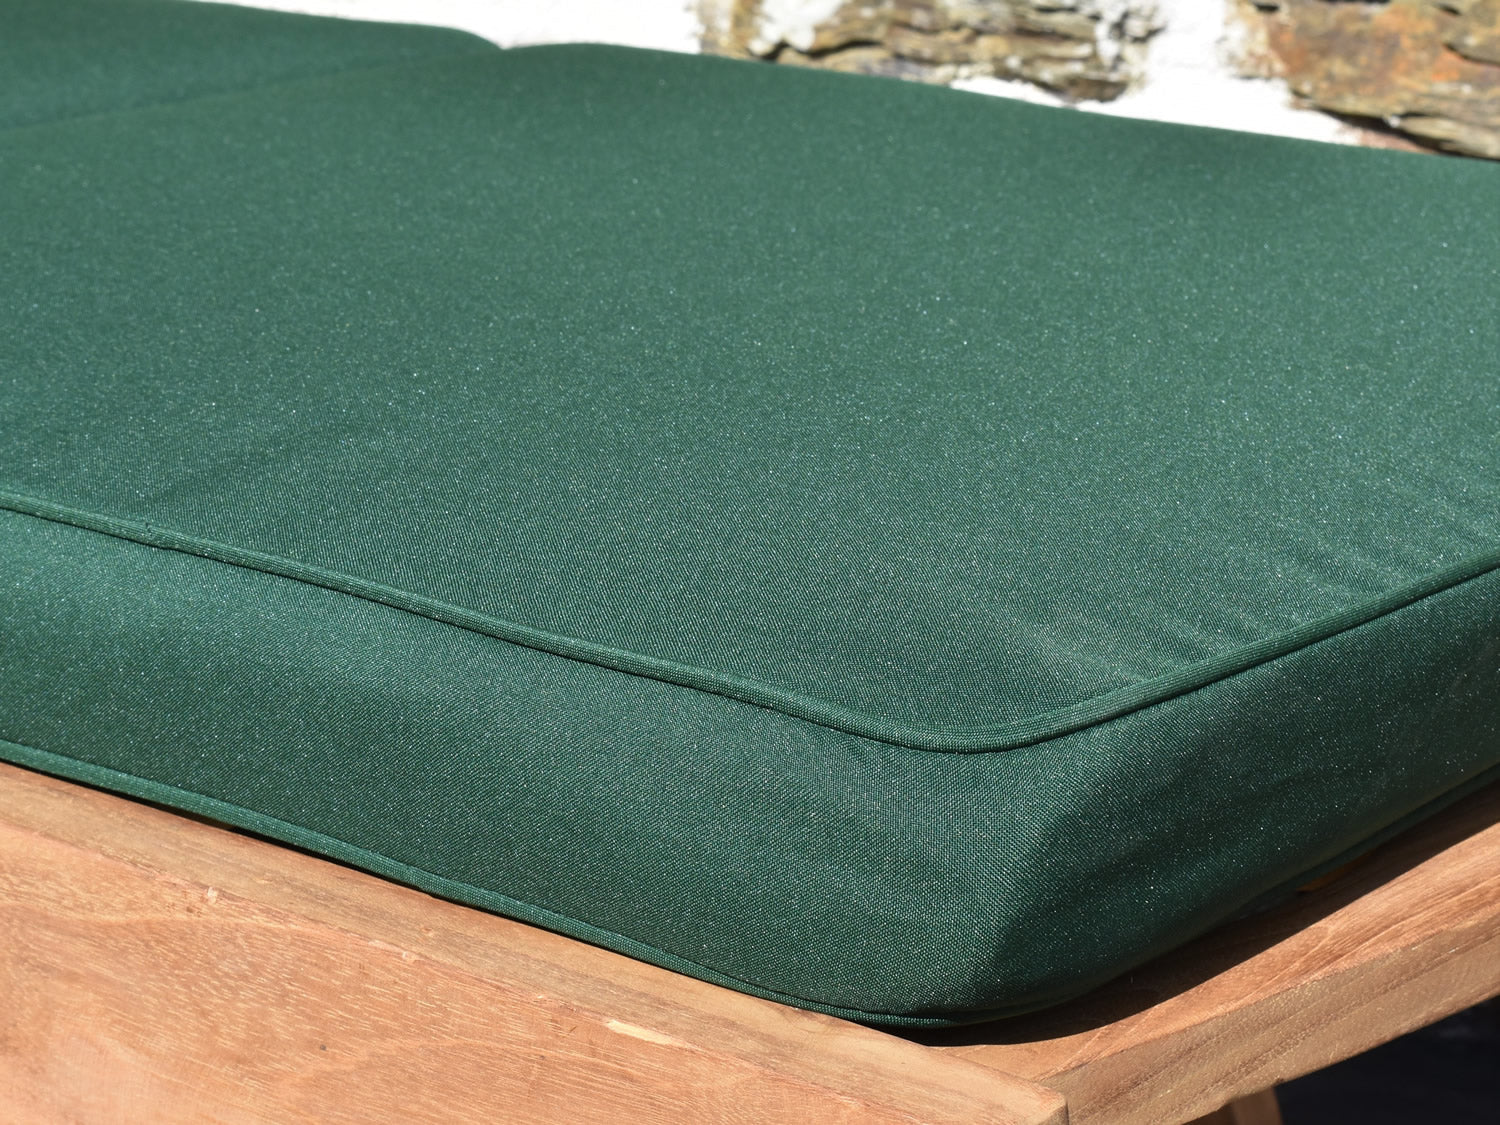 close-up detail of classic dark green garden sun lounger cushion fabric